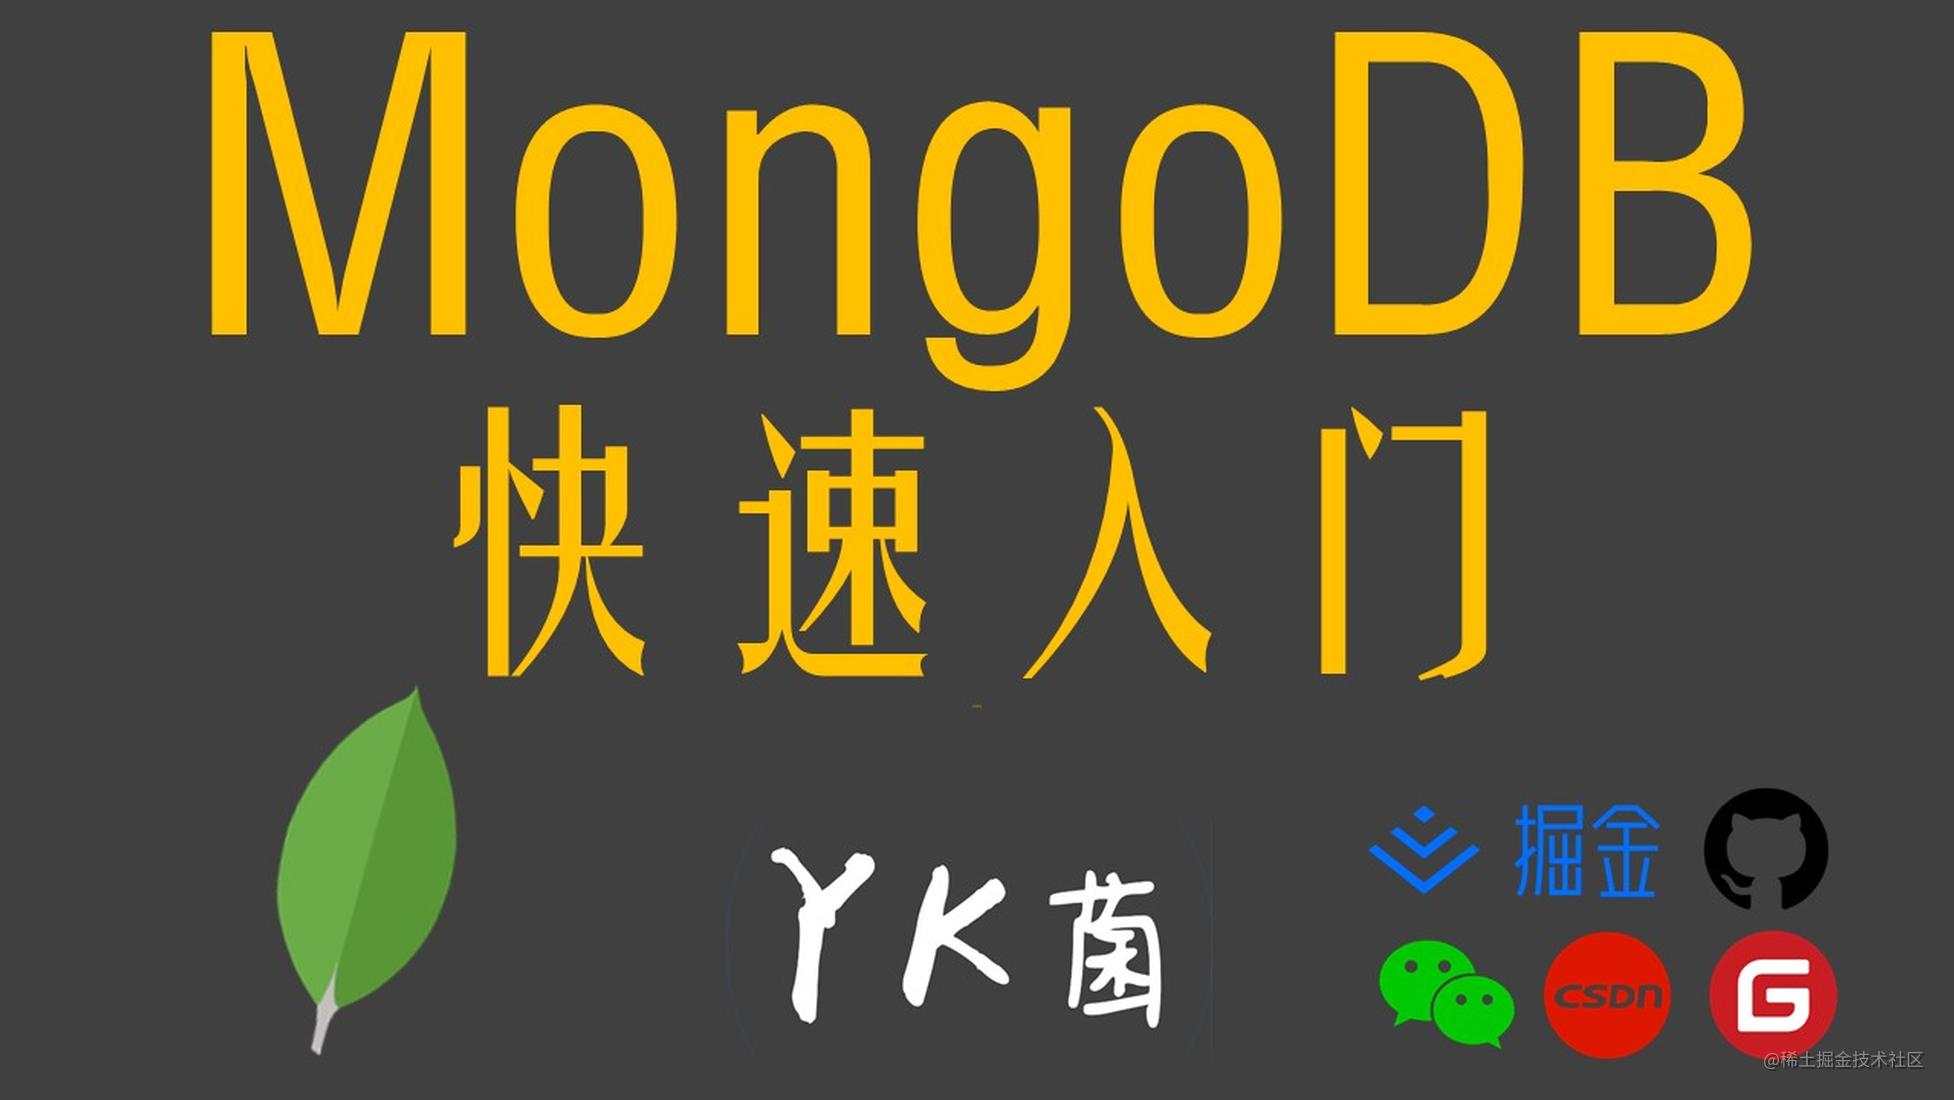 【MongoDB】快速入门 - 数据库安装与基本操作 - mongoose - 增删改查